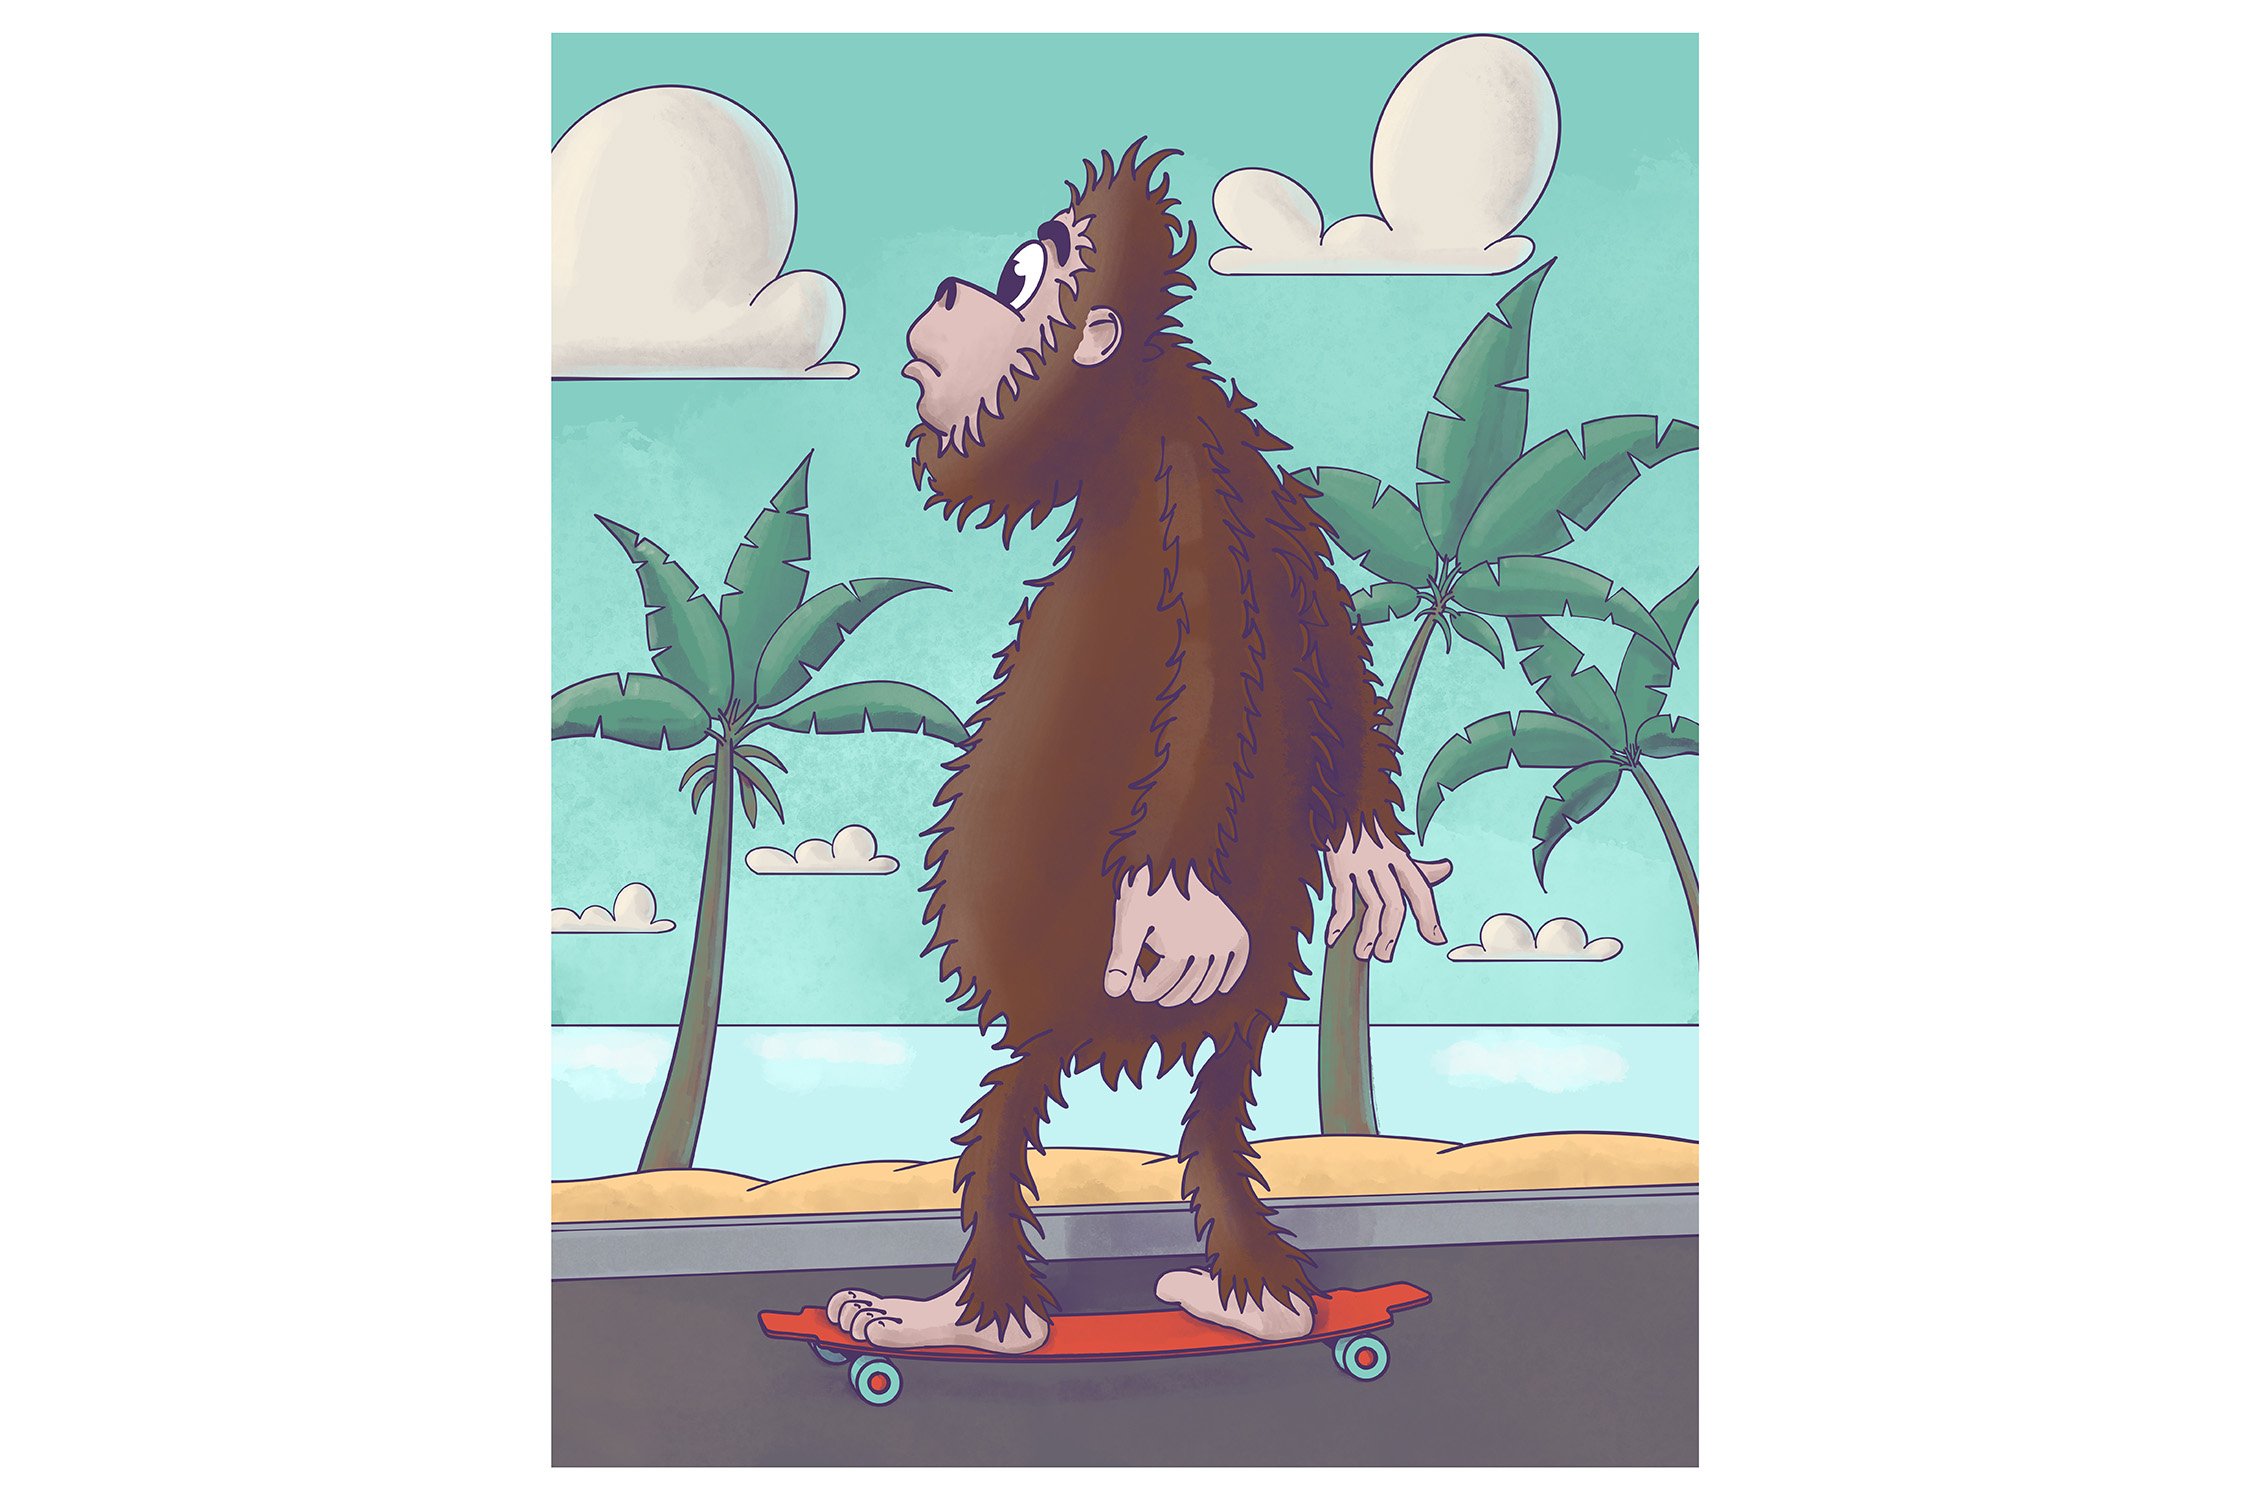 Bigfoot Skateboarder cover image.